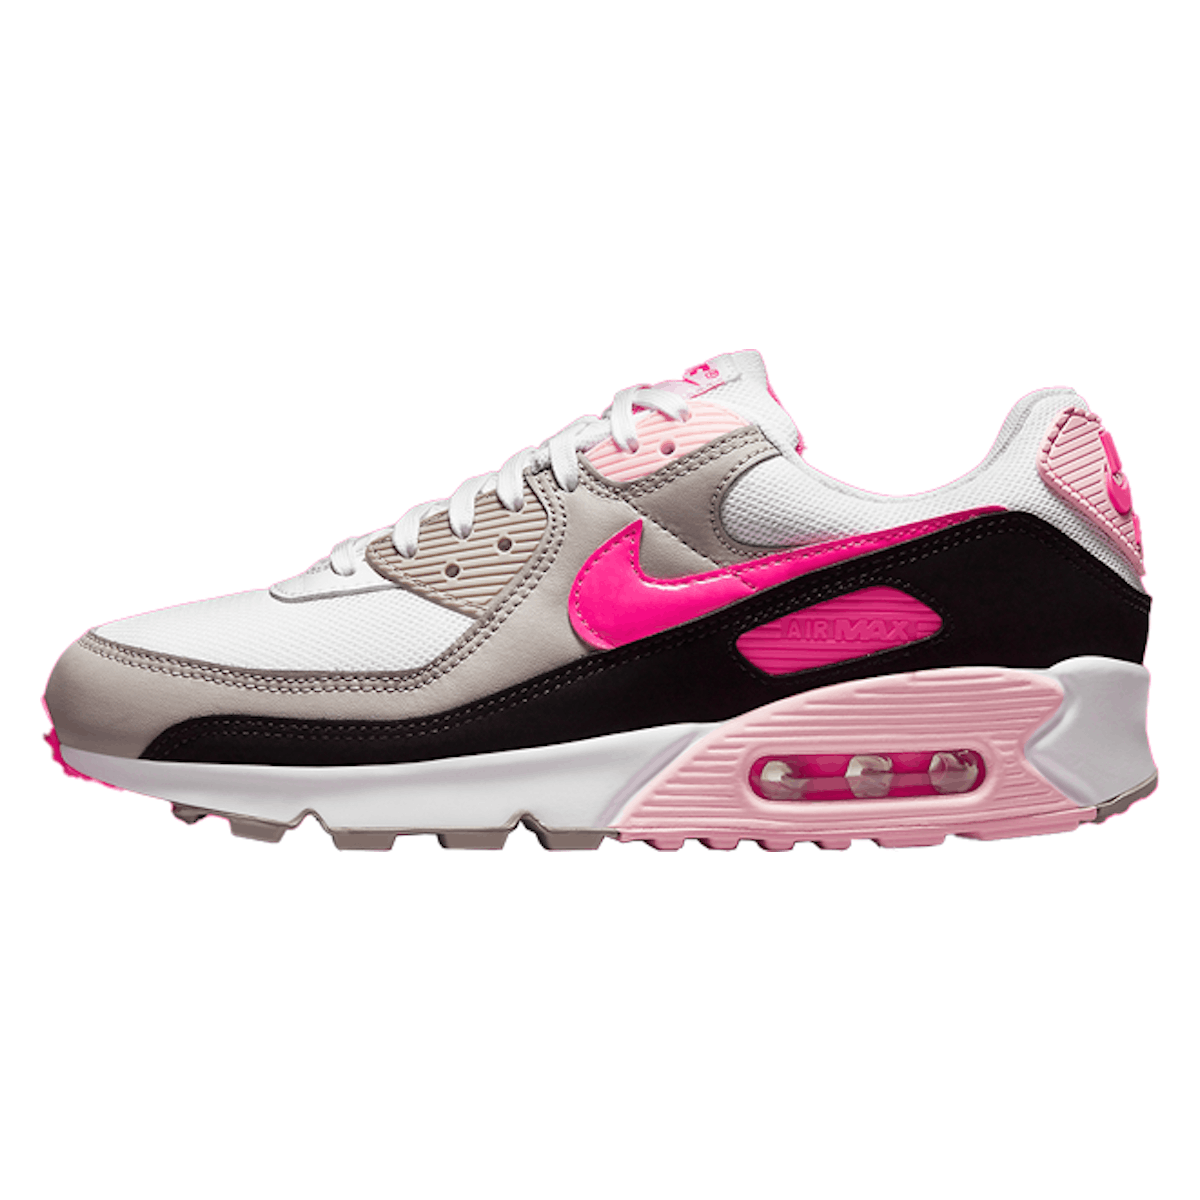 Nike Air Max 90 "White Grey Pink"